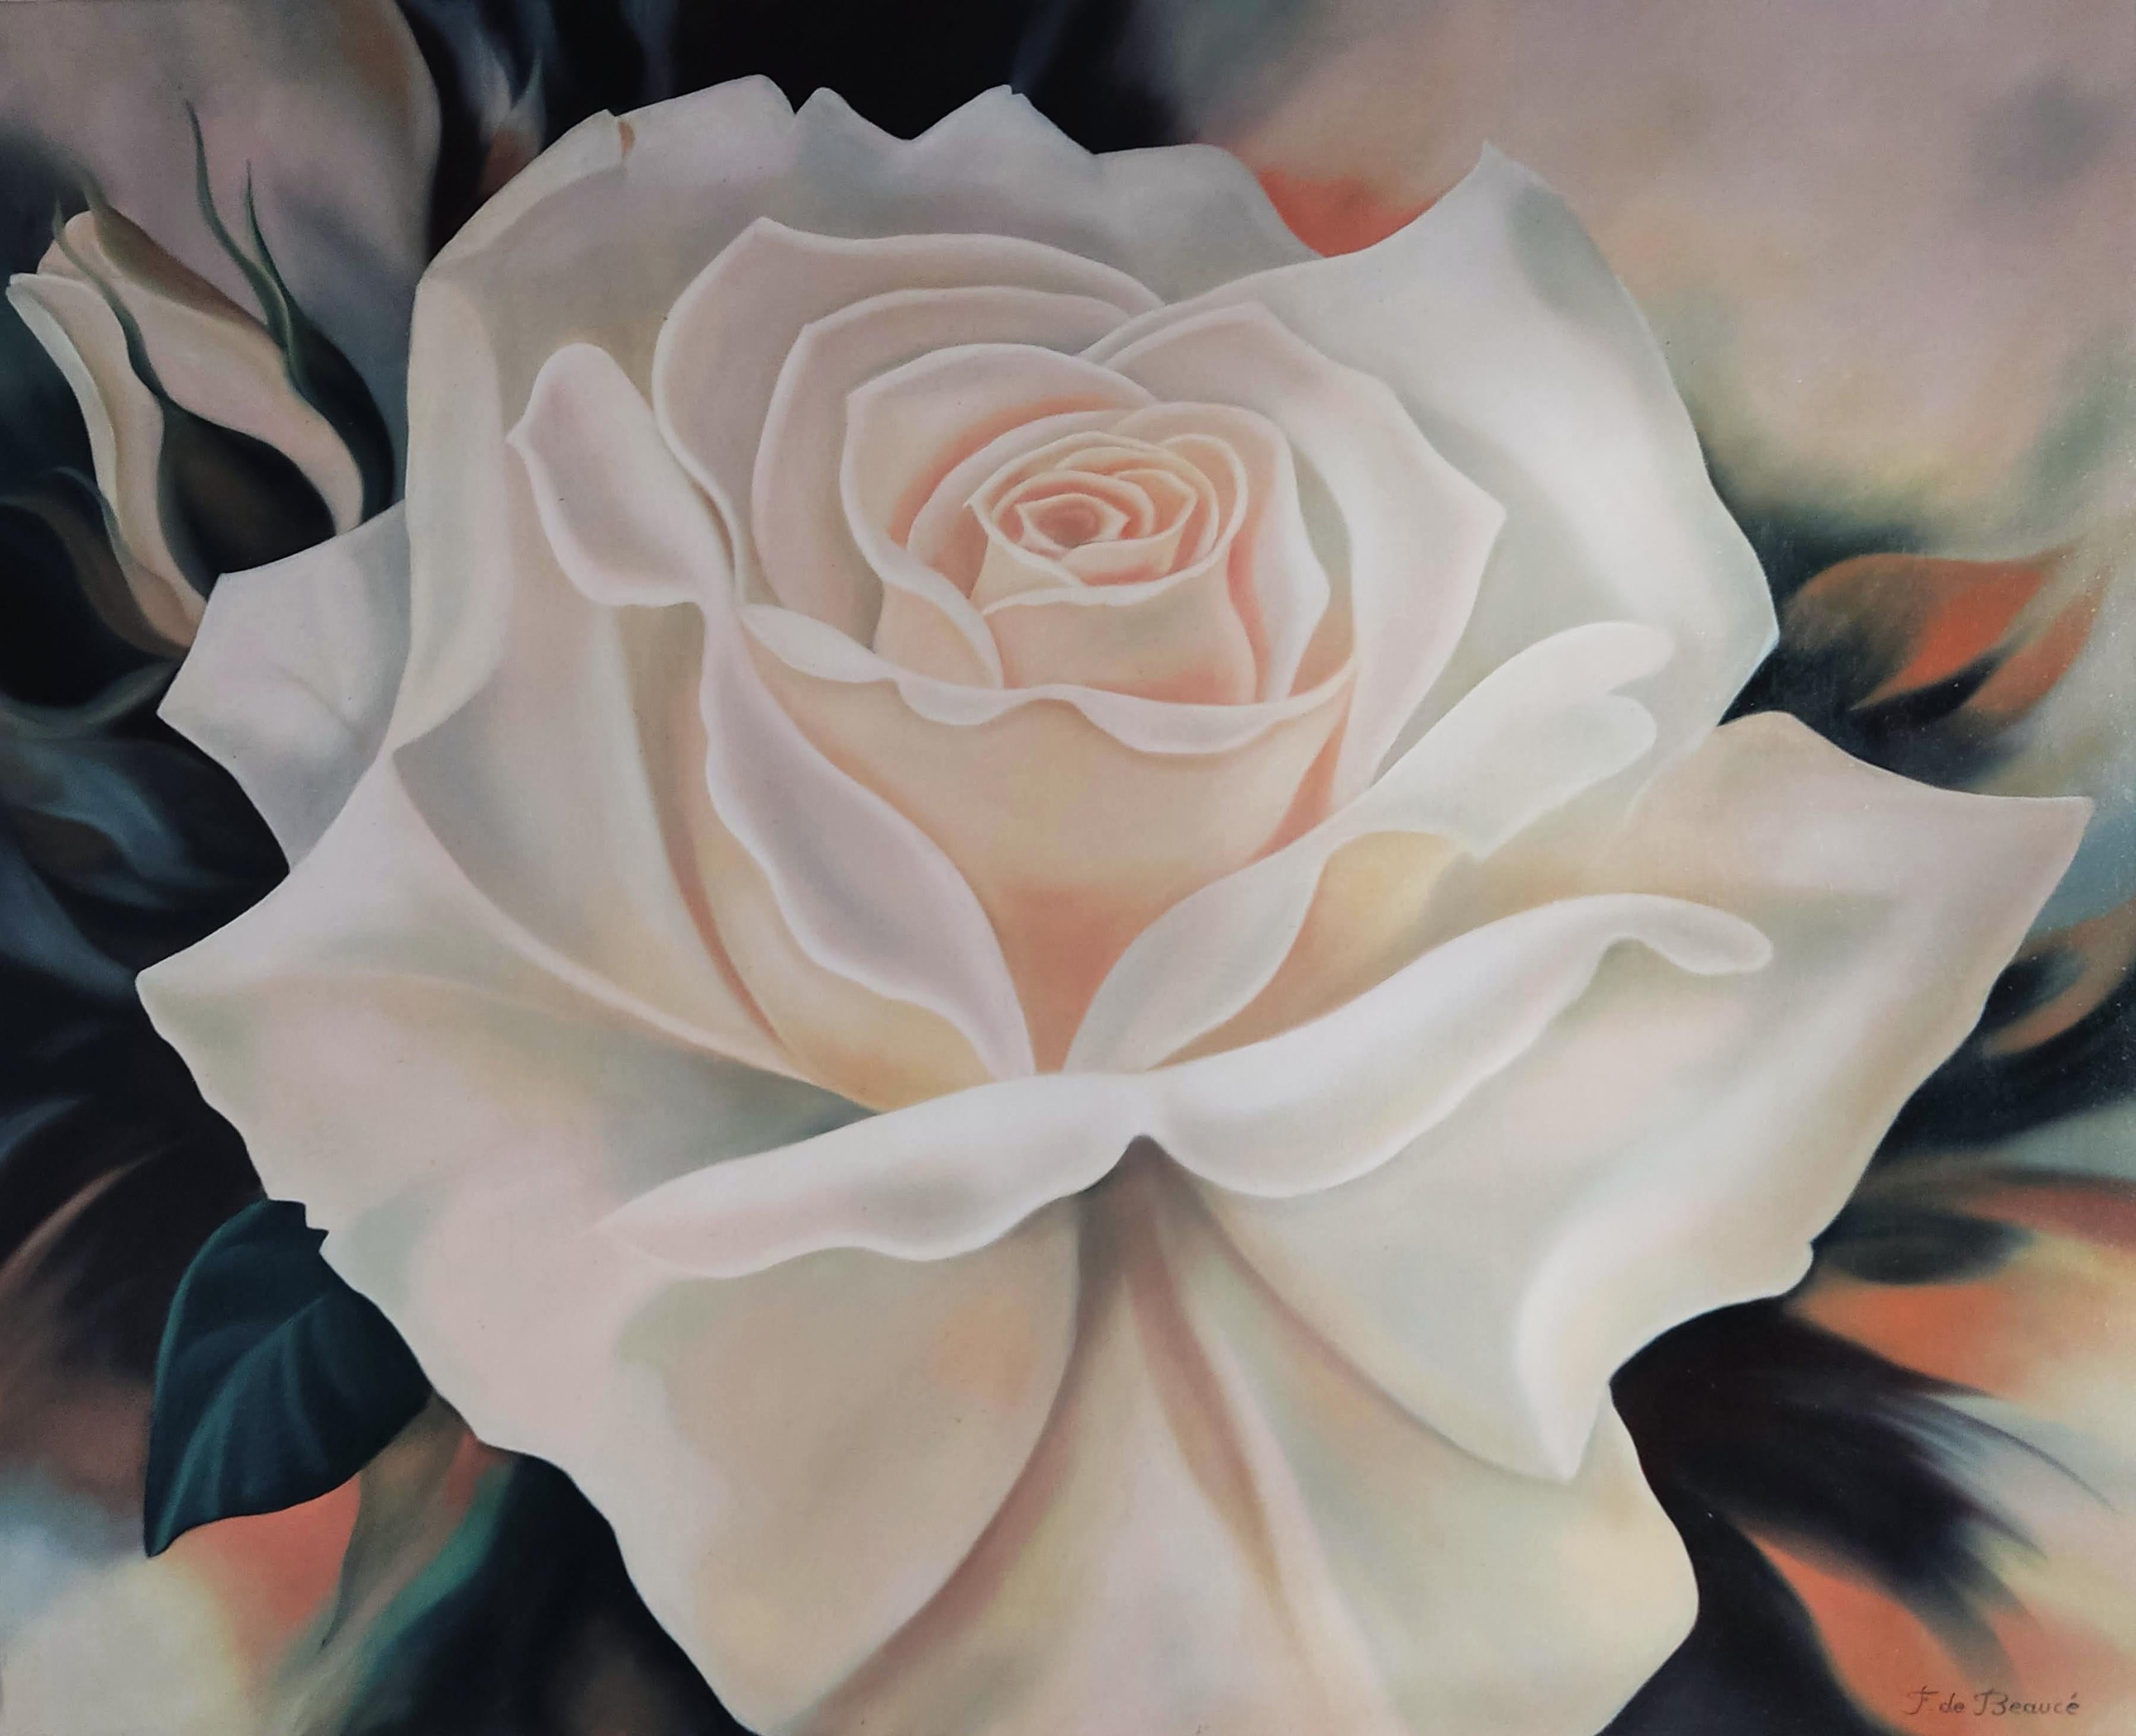 Françoise de Beaucé Interior Painting – Blooming Rose, Original Ölgemälde, 100 X 81 cm, Landschaft, Blume, Pflanze